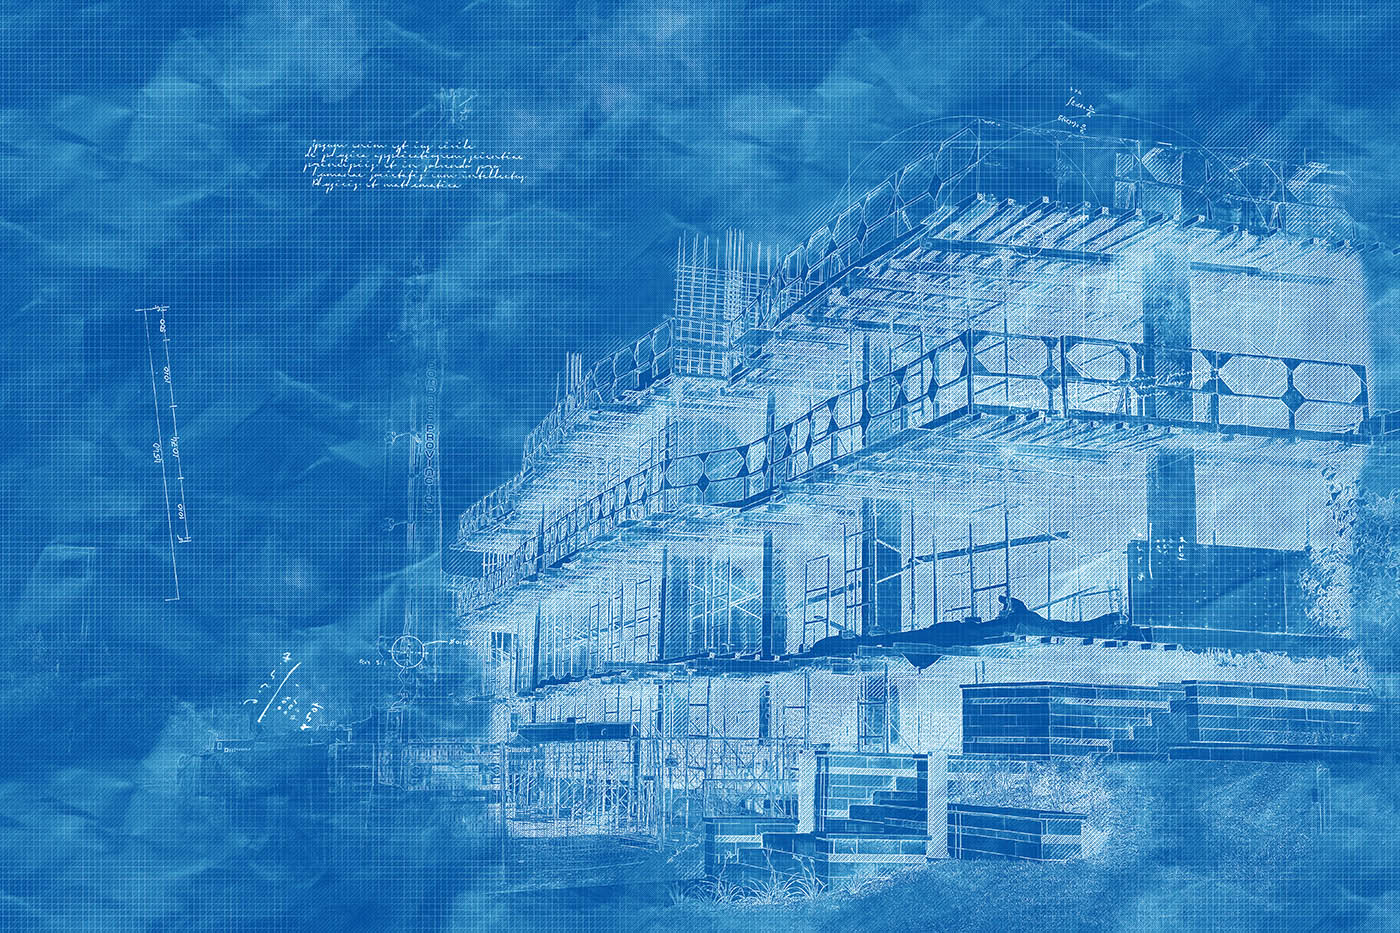 Construction Project Blueprint Sketch Image